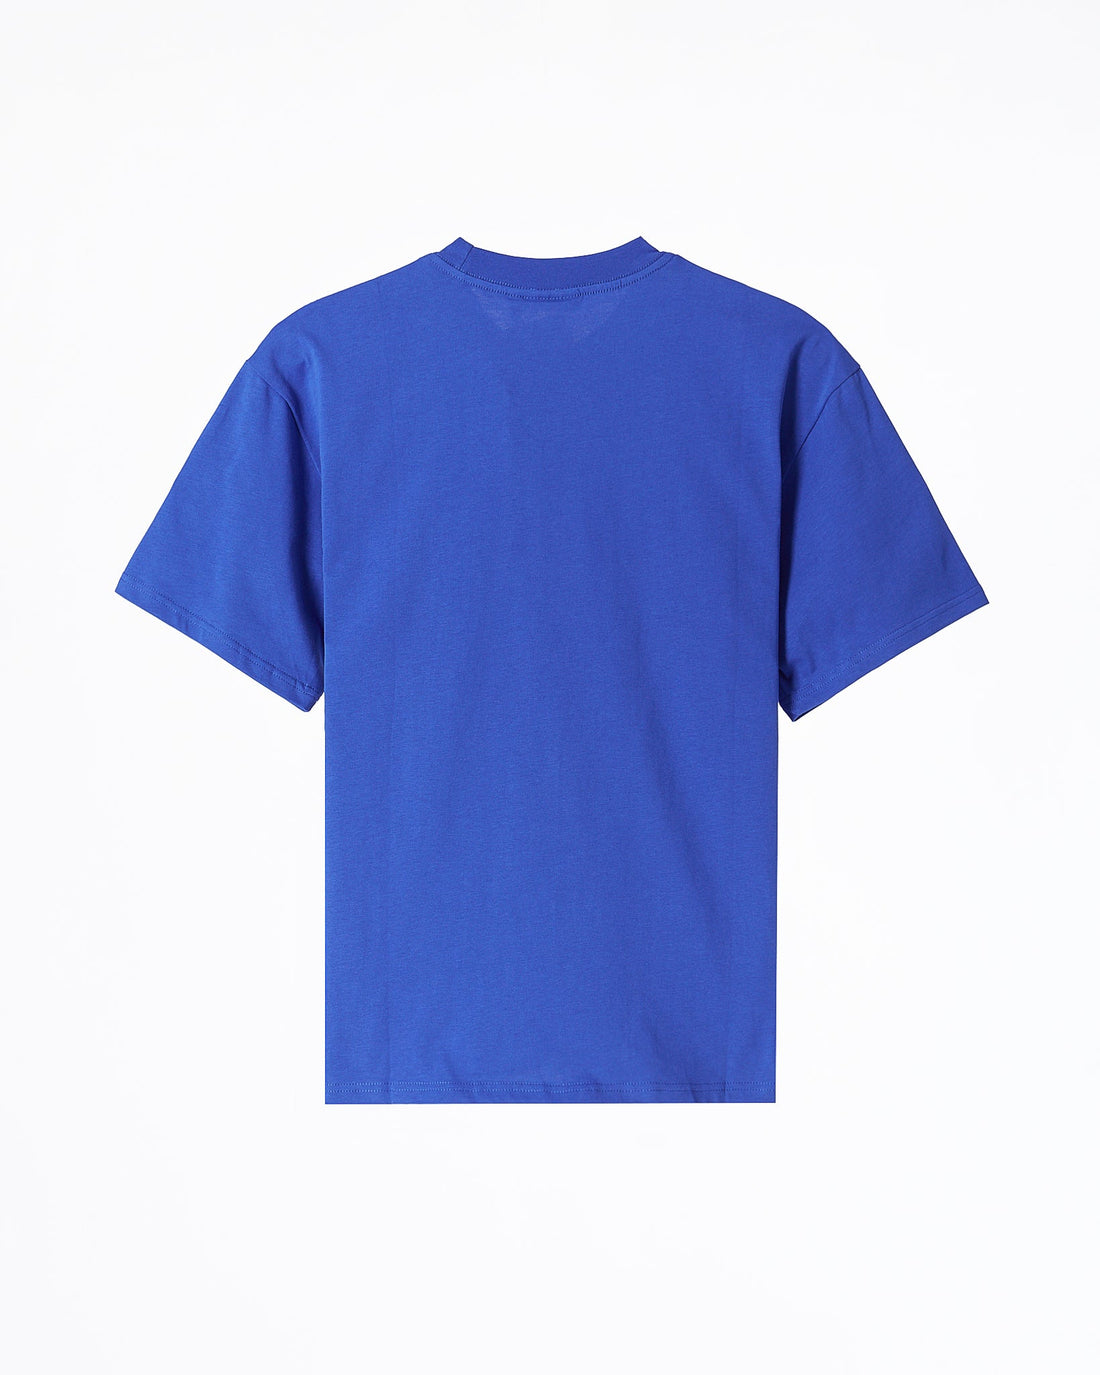 MOI OUTFIT-DRE Flower Smiling Unisex Blue T-Shirt 19.90